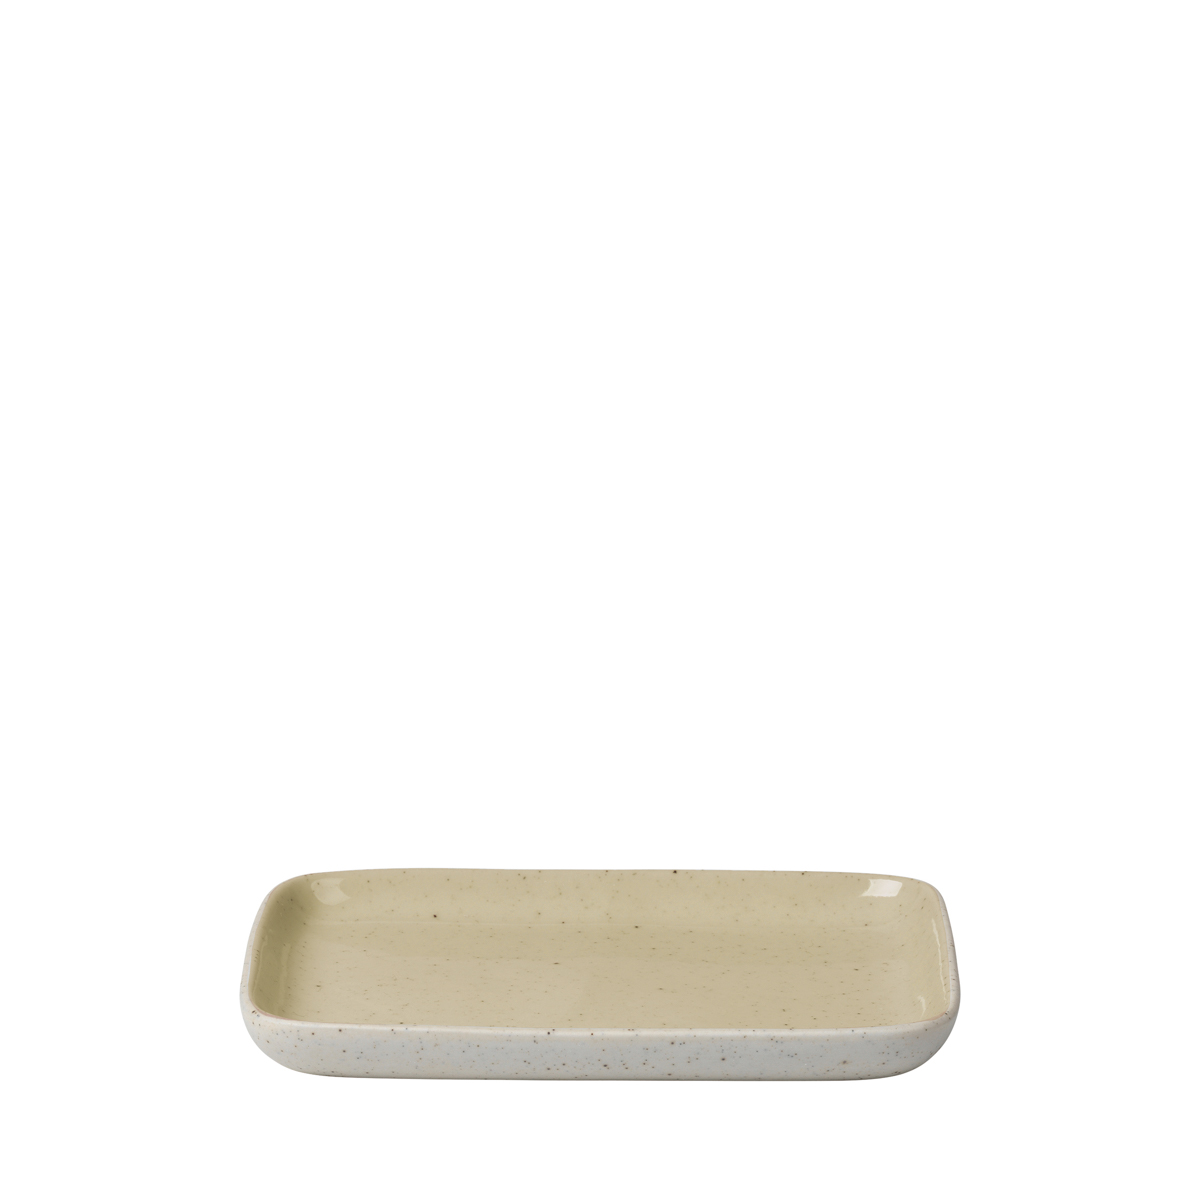 Snack Teller -SABLO- Savannah Size M. Material: Keramik. Von Blomus.